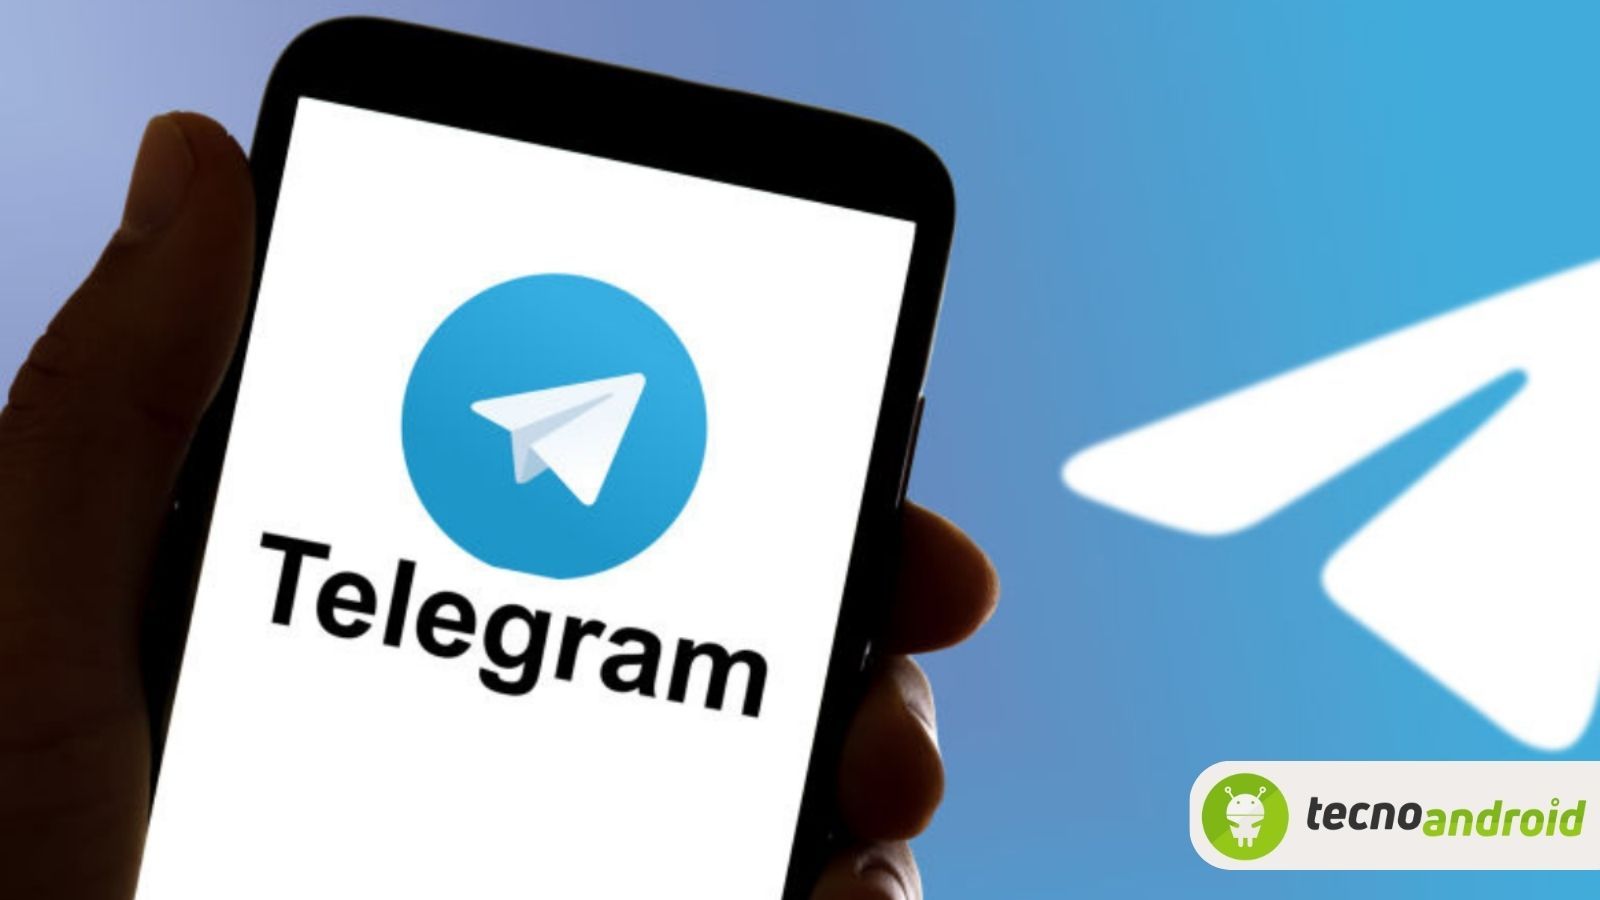 trucco telegram autonomia